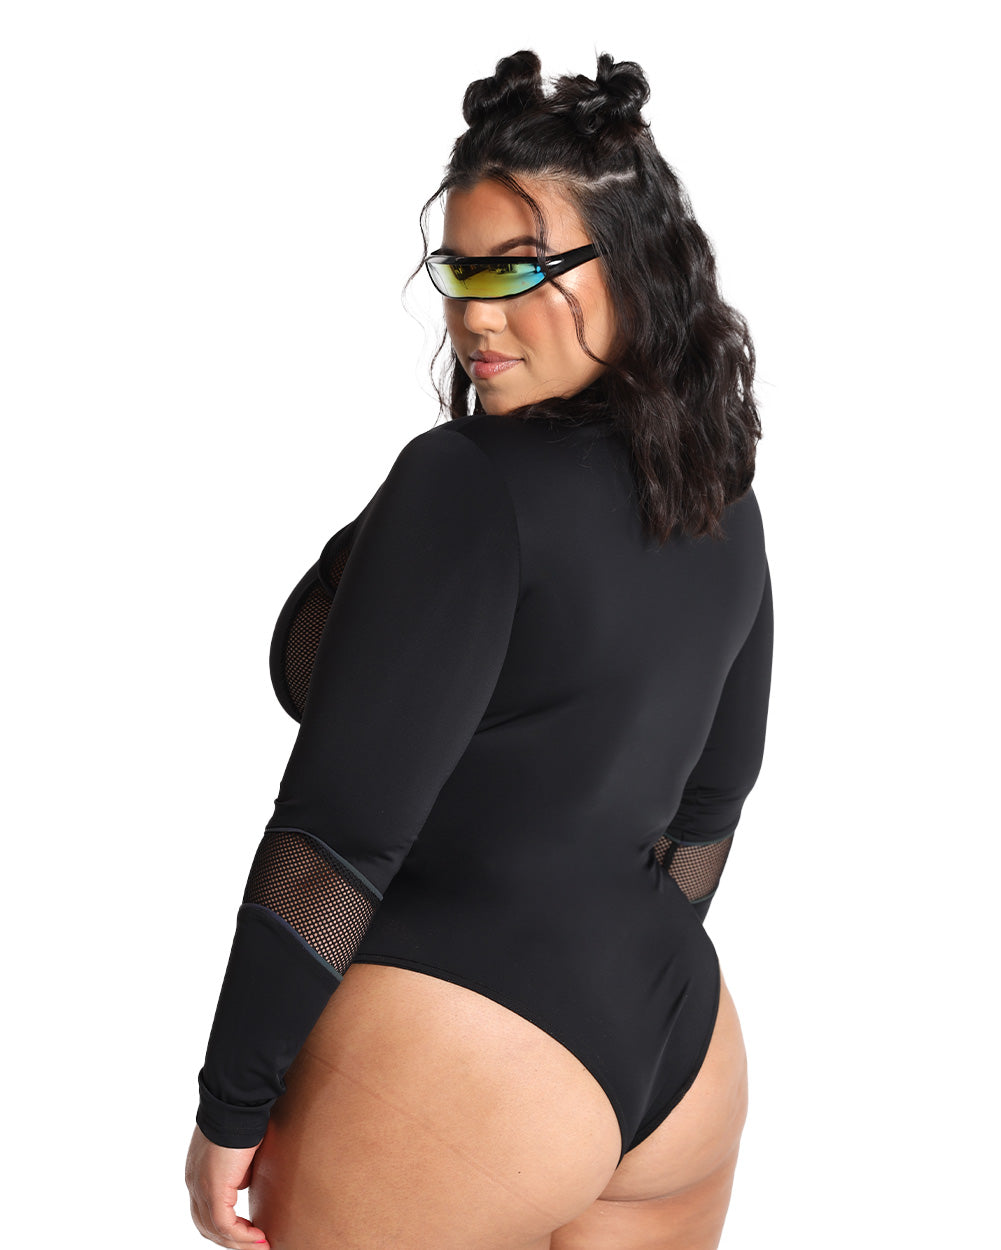 Blackout Bodysuit (Plus Size) – The Diva's Diamond